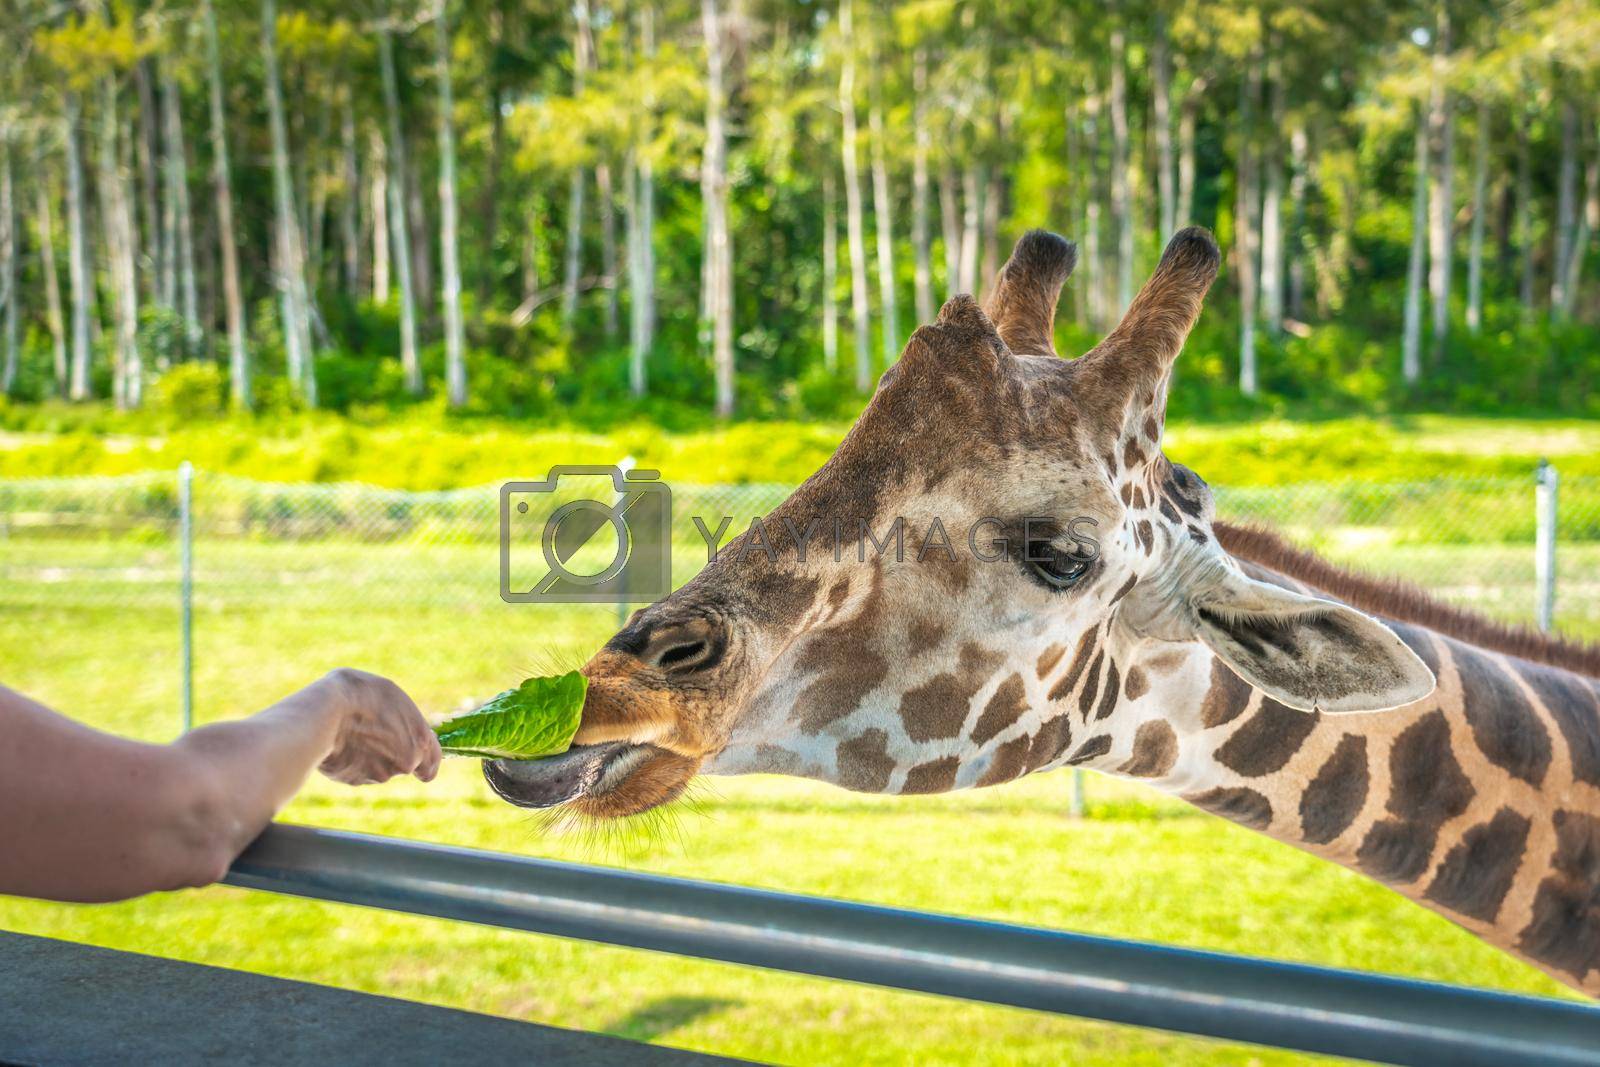 Royalty free image of Zoo visitors feeding a giraffe from raised platform by Mariakray